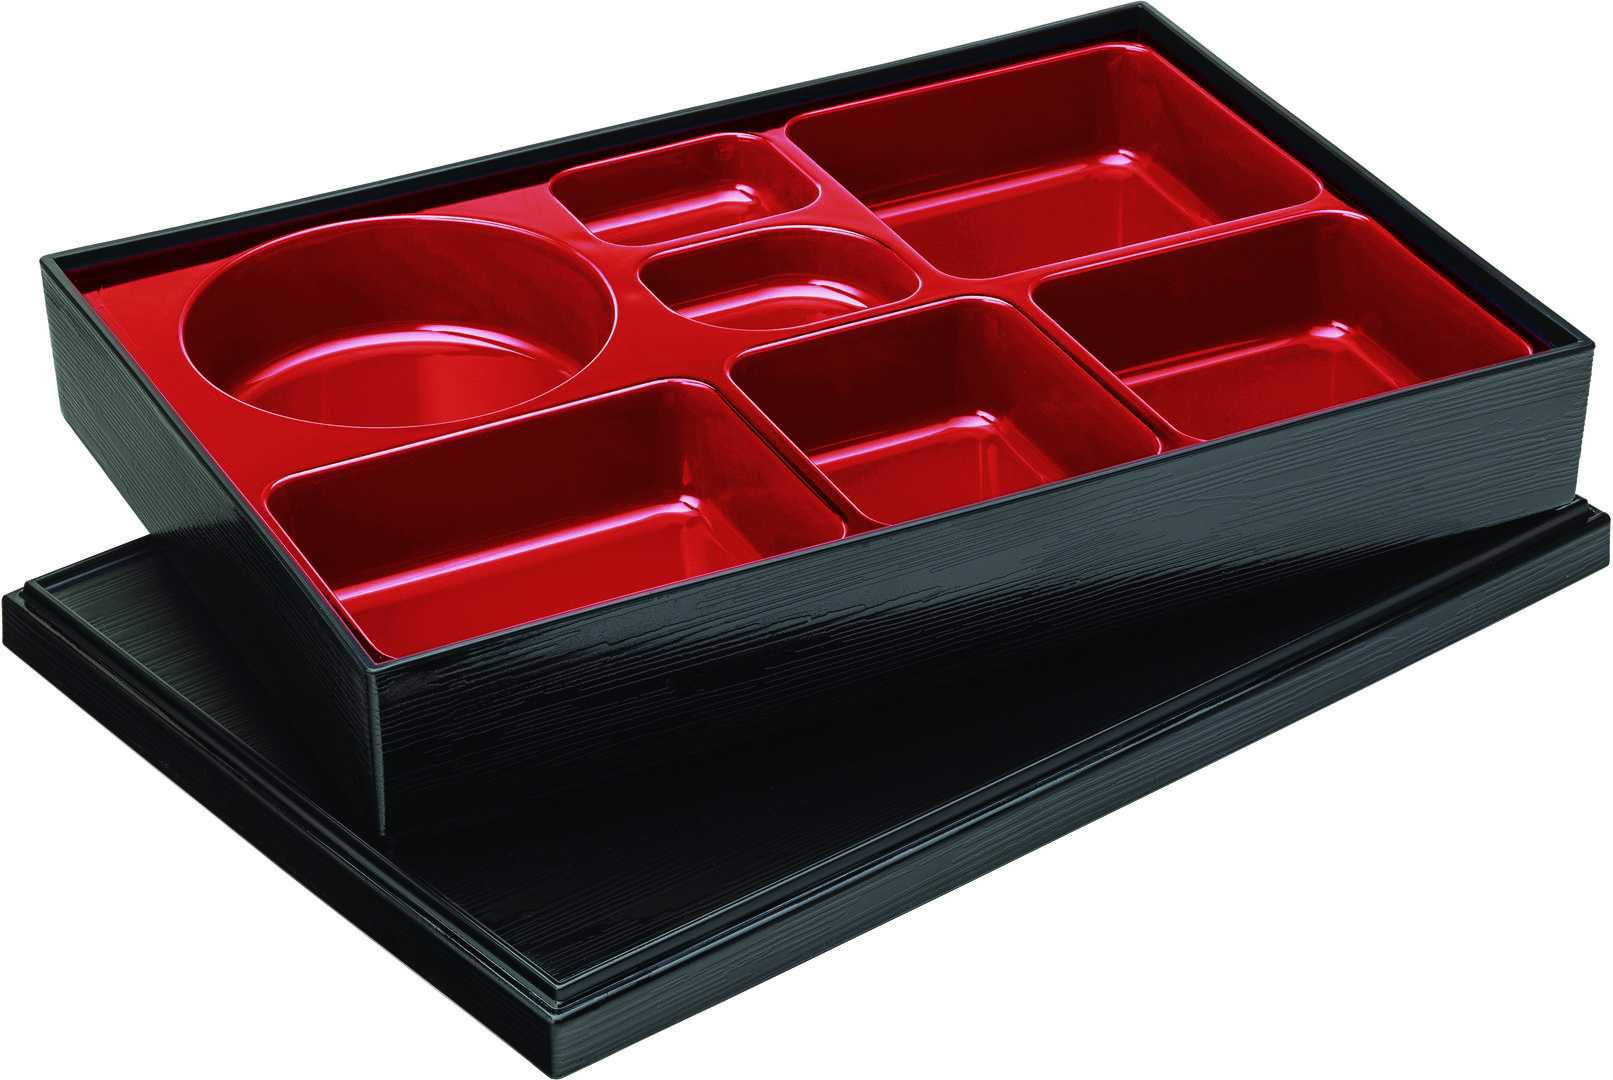 UTOPIA Luxe Bento Box (37 x 25.5 x 6.5cm) 7 compartment